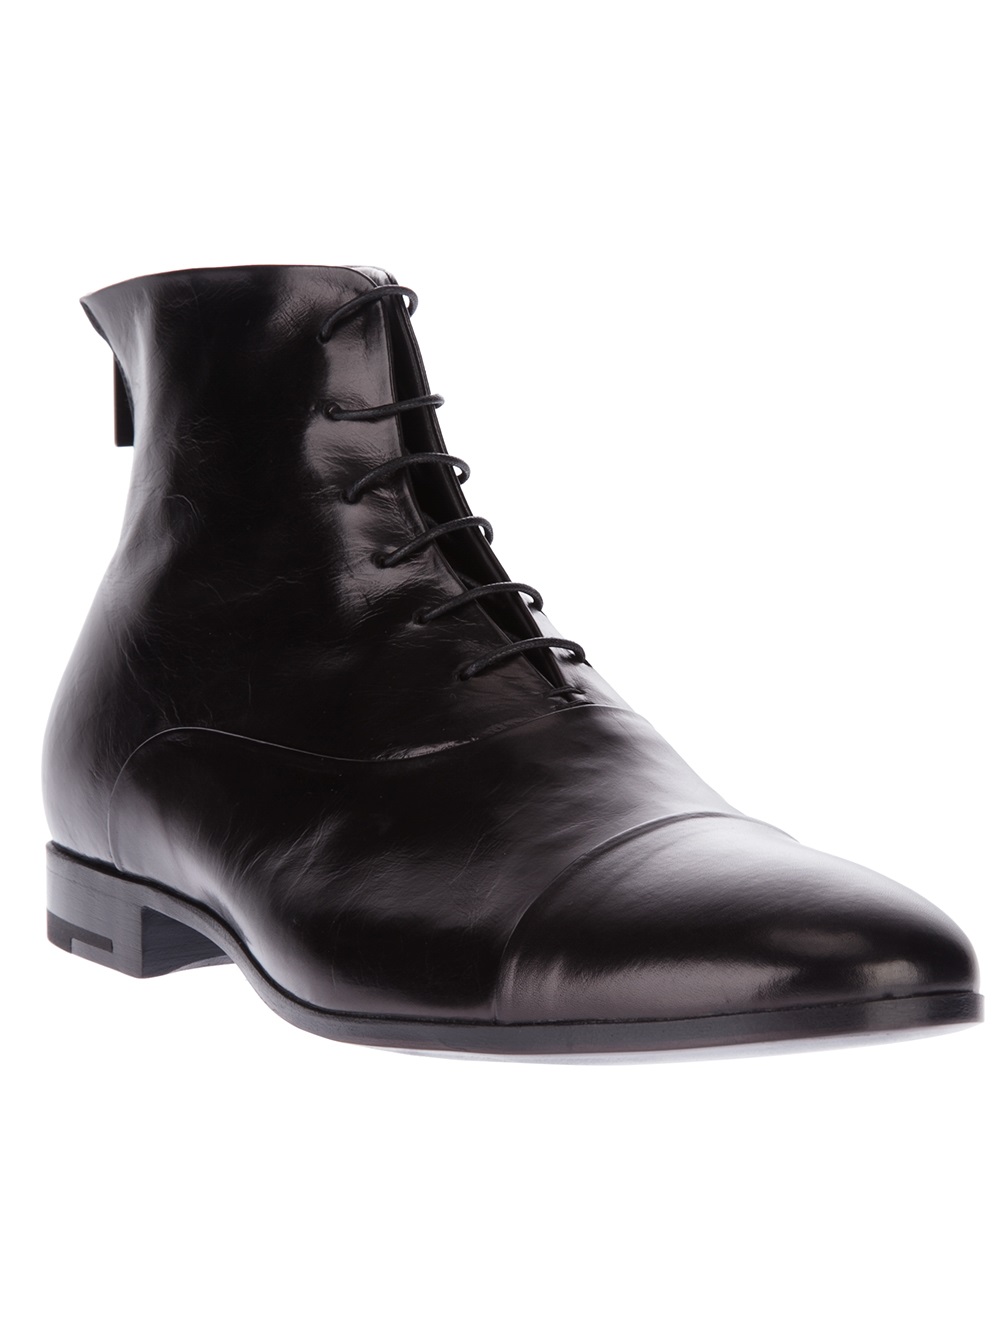 Lyst - Giorgio Armani Ankle Boot in Black for Men